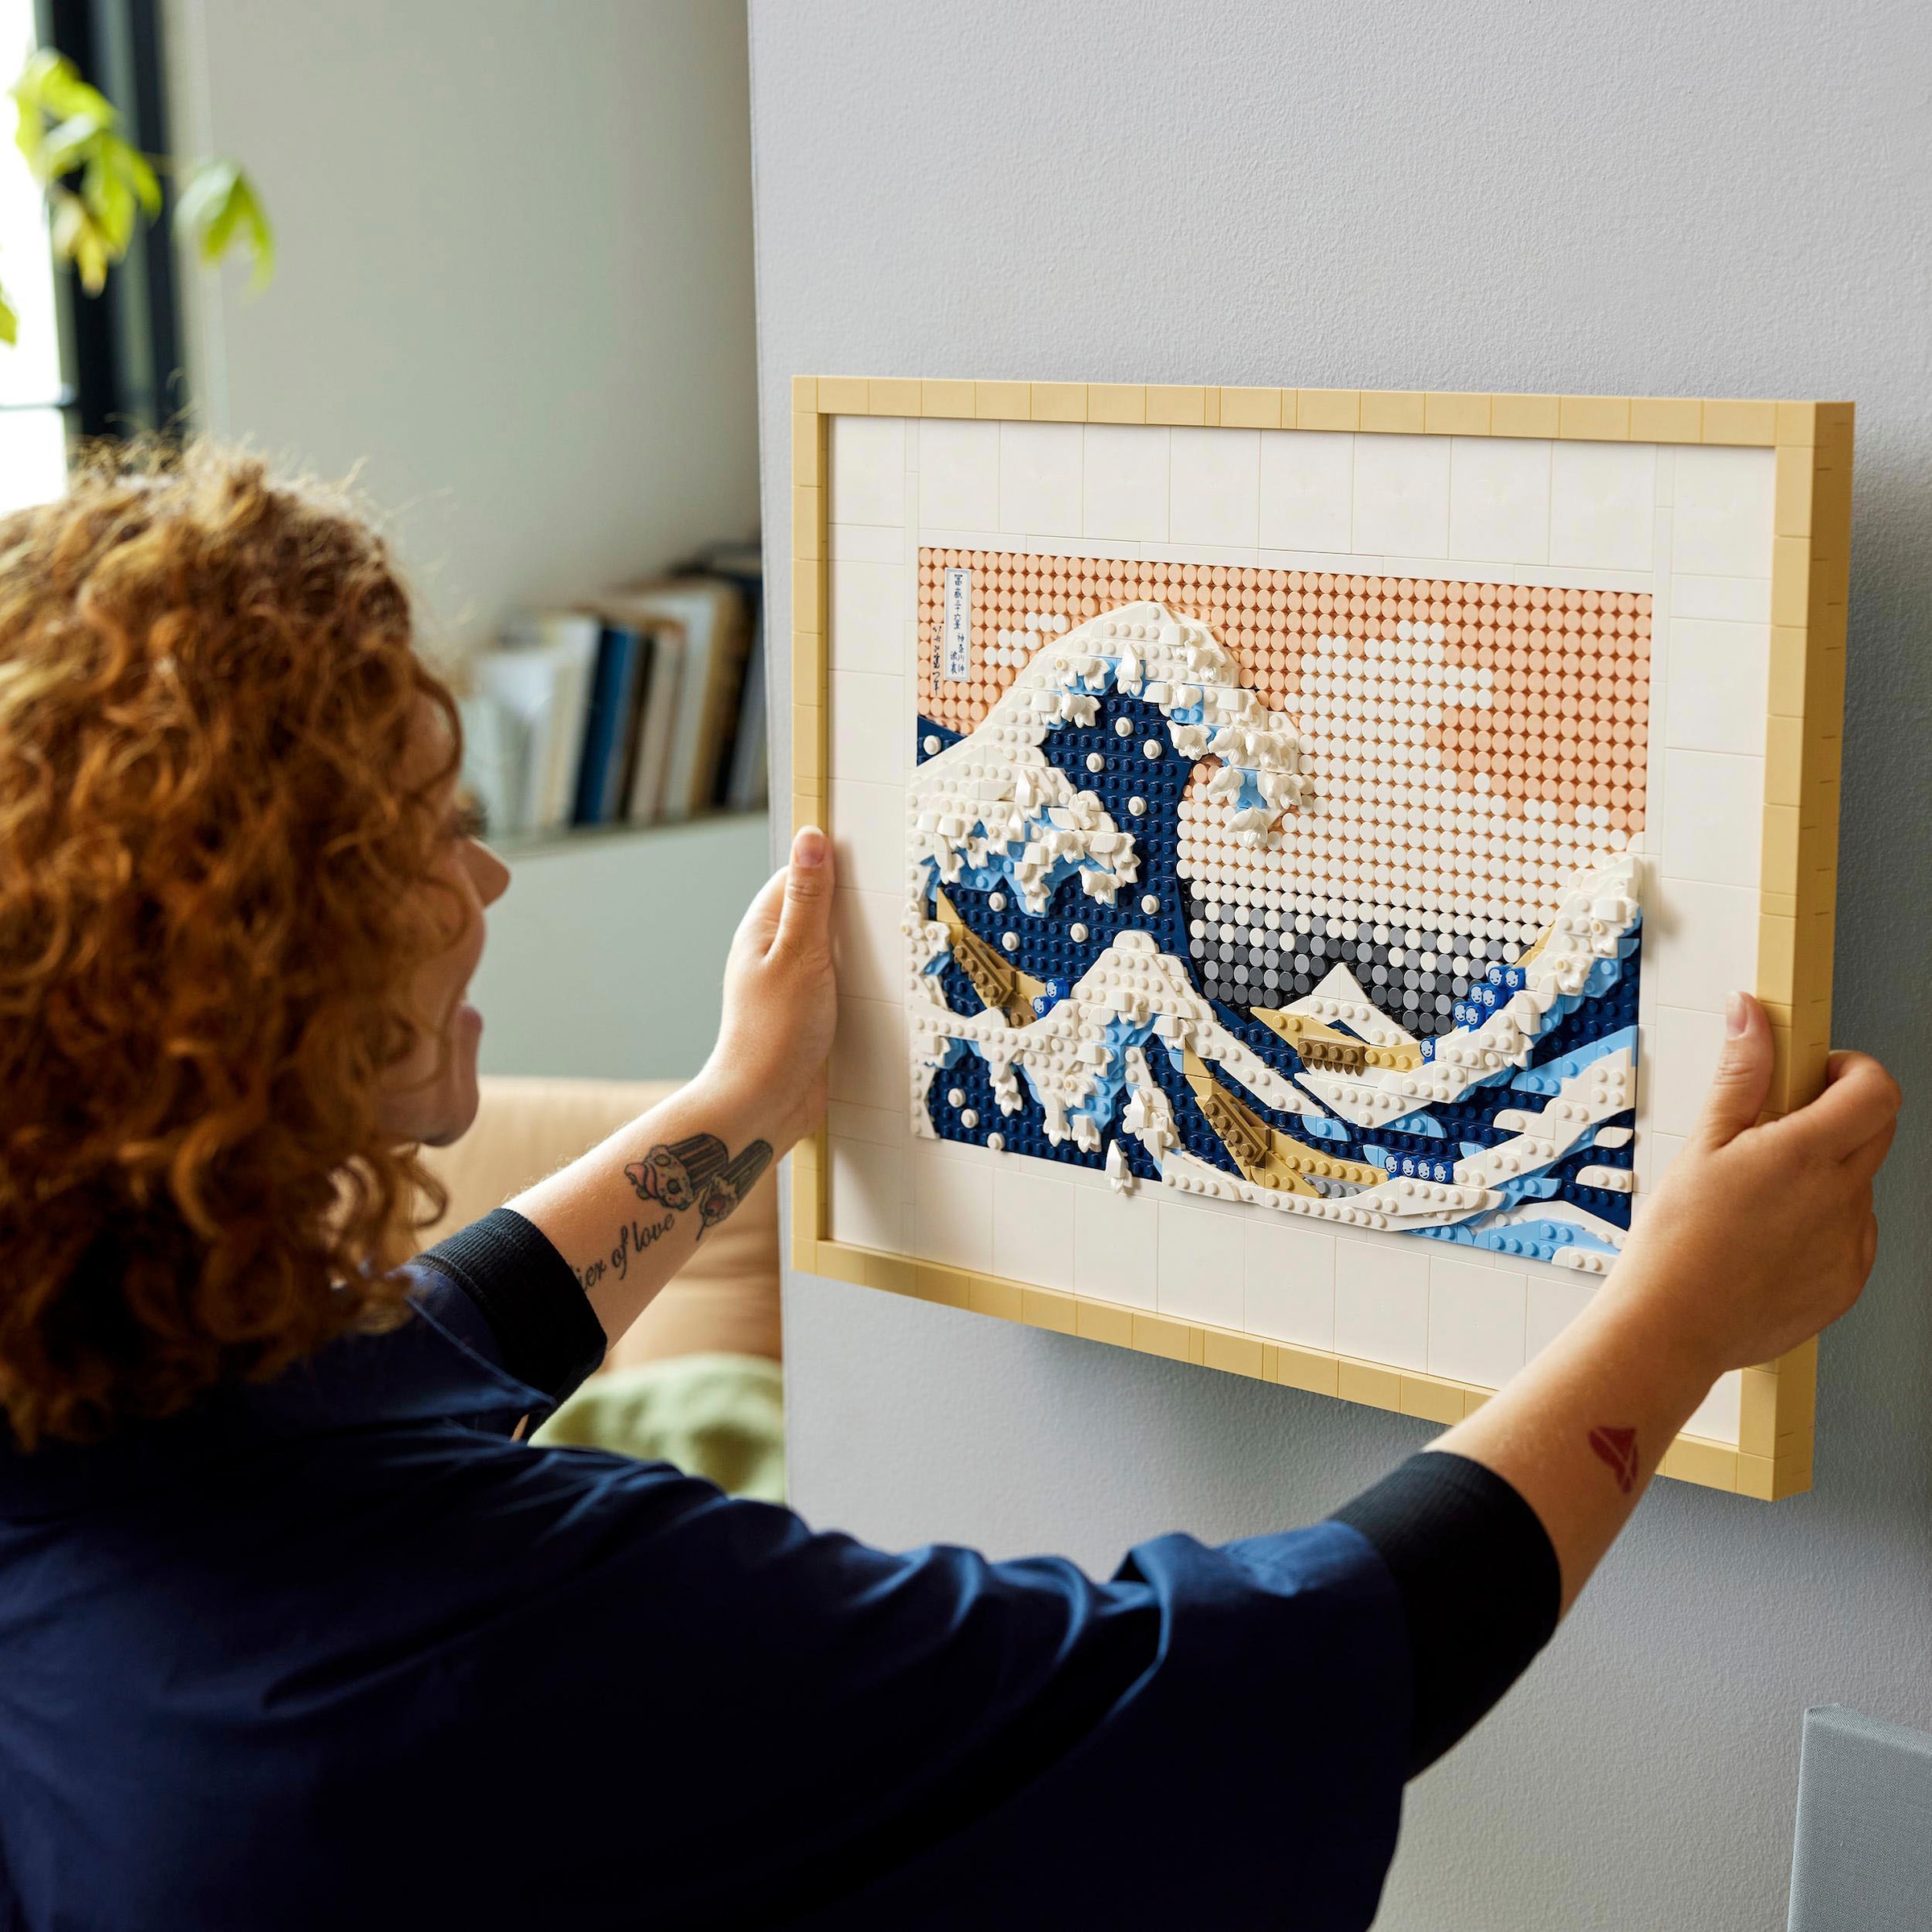 LEGO® Konstruktionsspielsteine »Hokusai – Grosse Welle (31208), LEGO® Art«, (1810 St.)